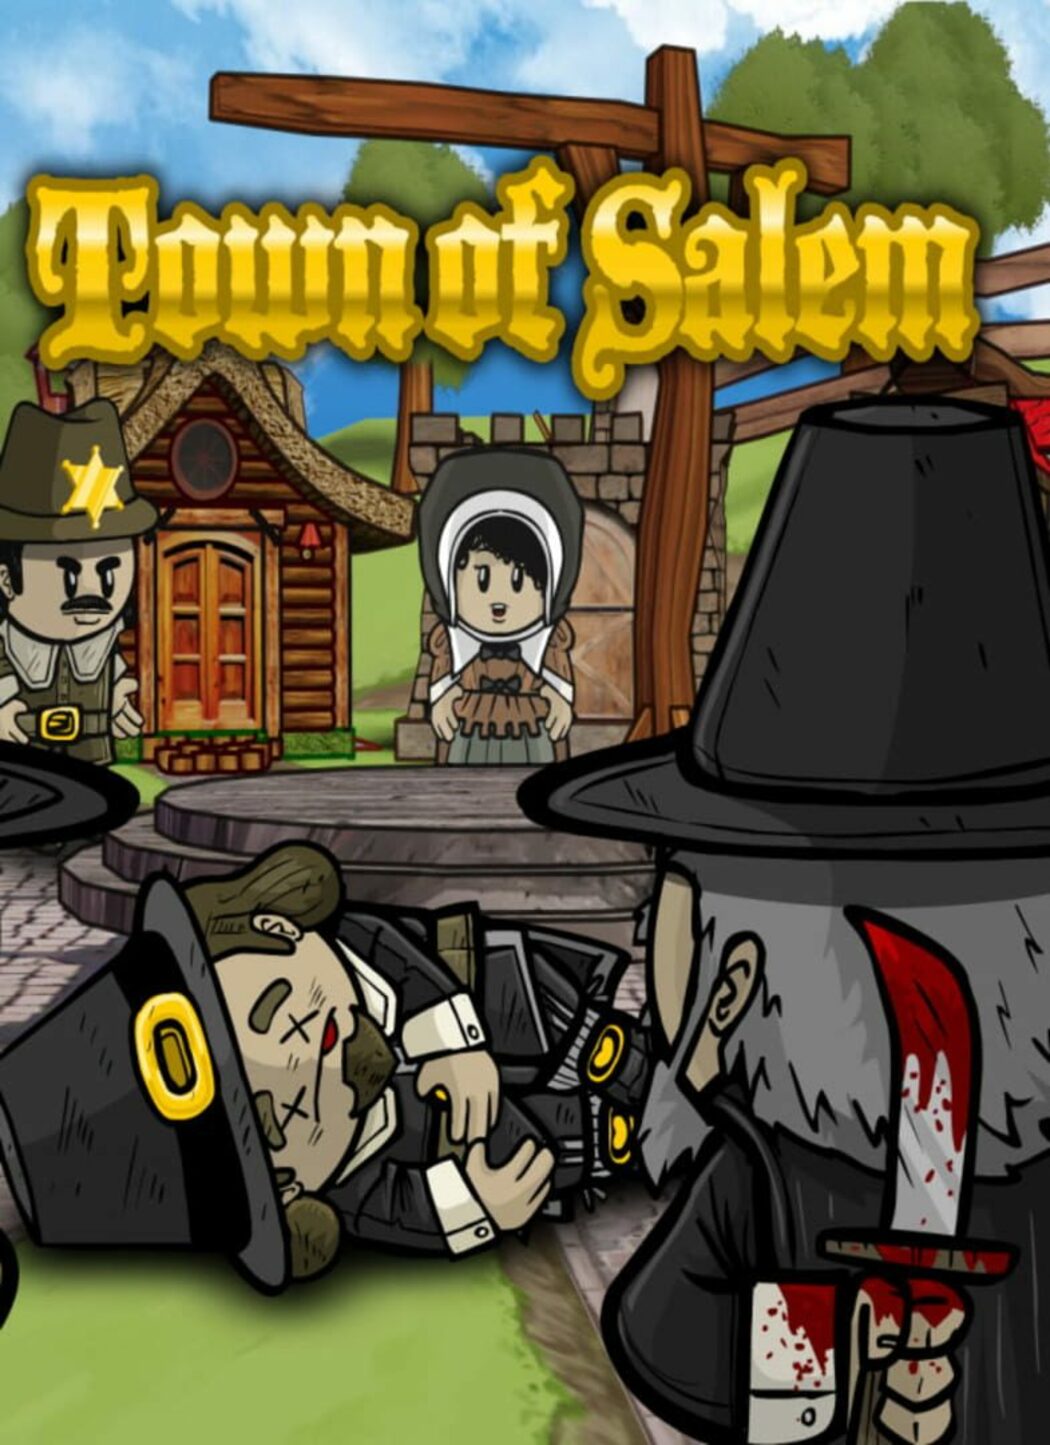 Town of Salem on Steam